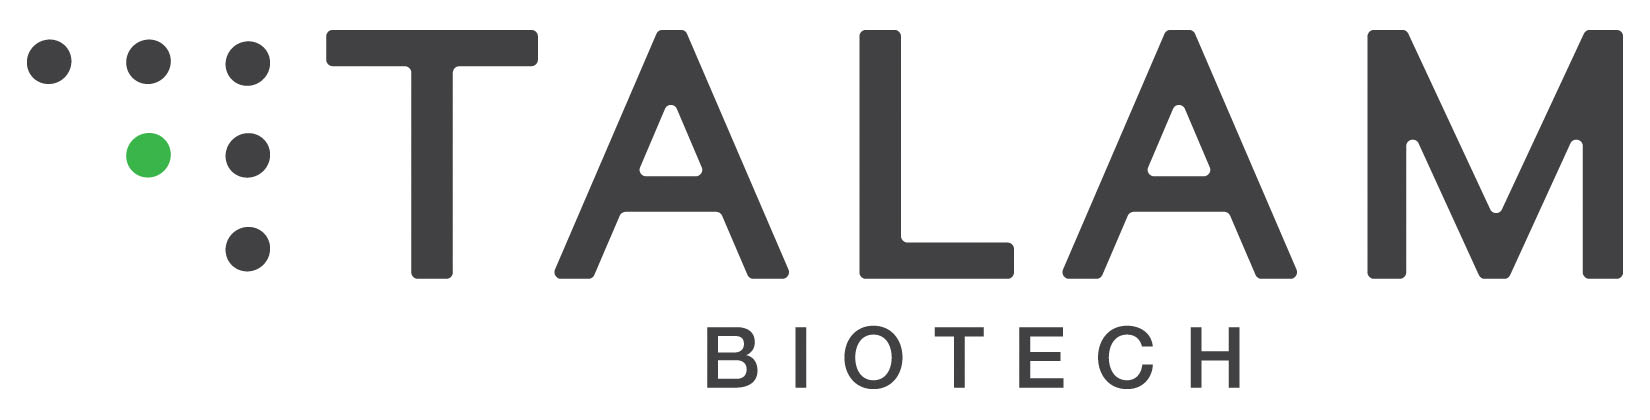 Talam Biotech